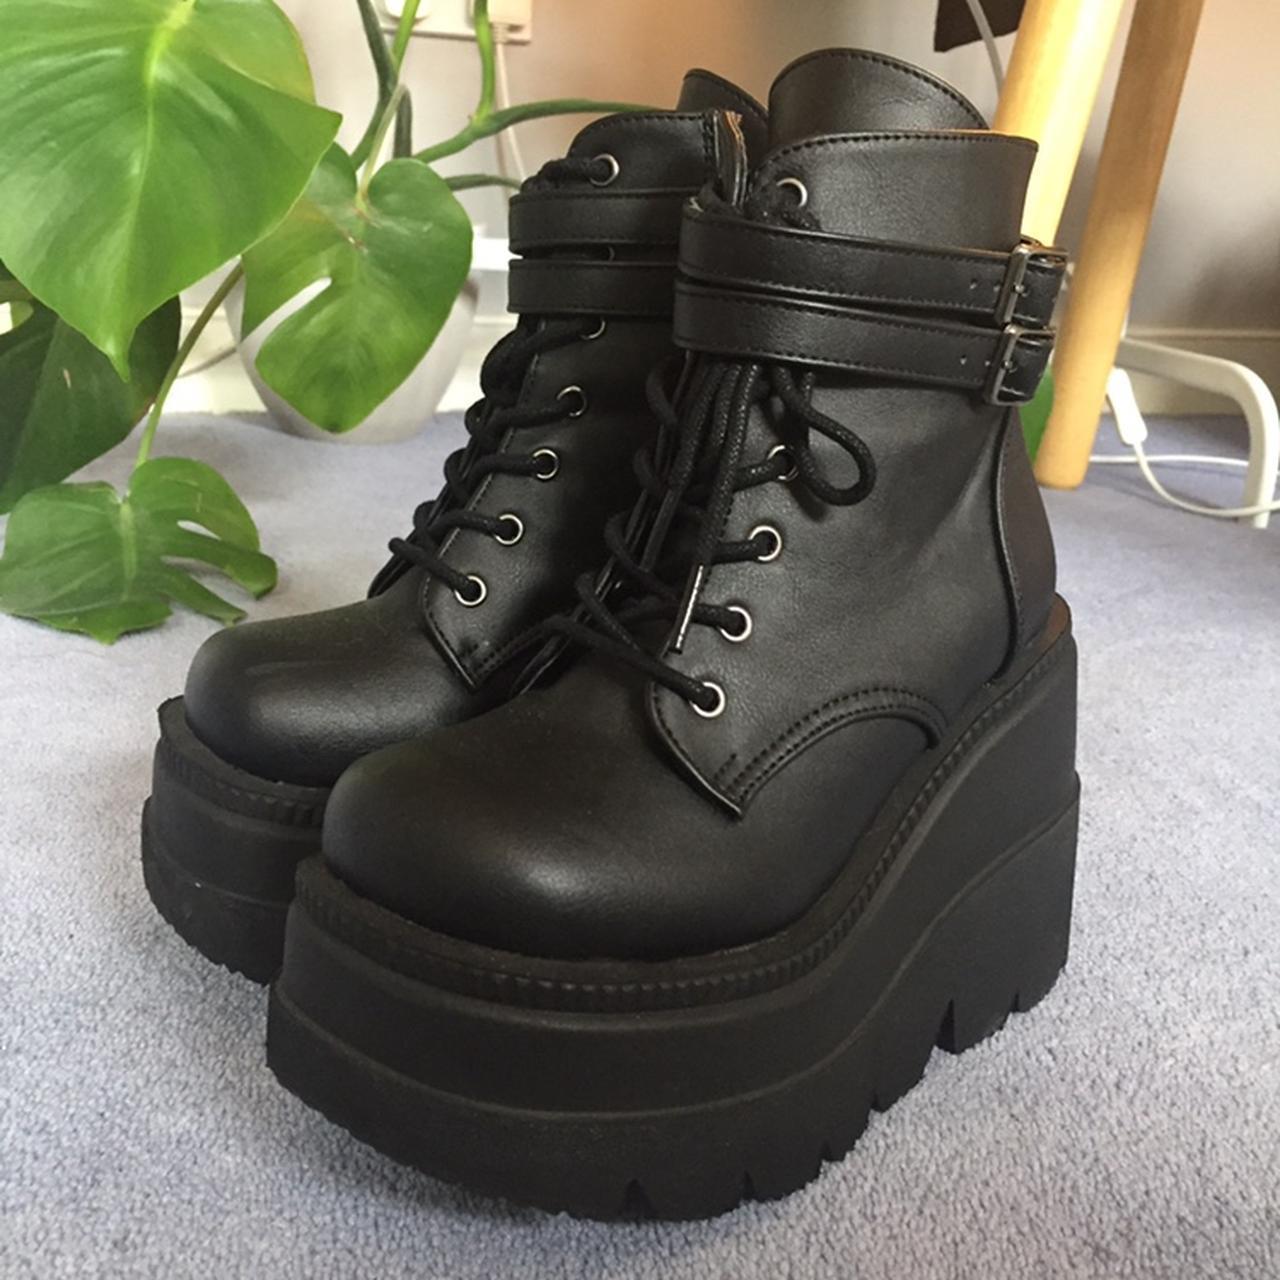 ⭐️ Demonia shaker- 52 platform boots, so cute 💕 -... - Depop